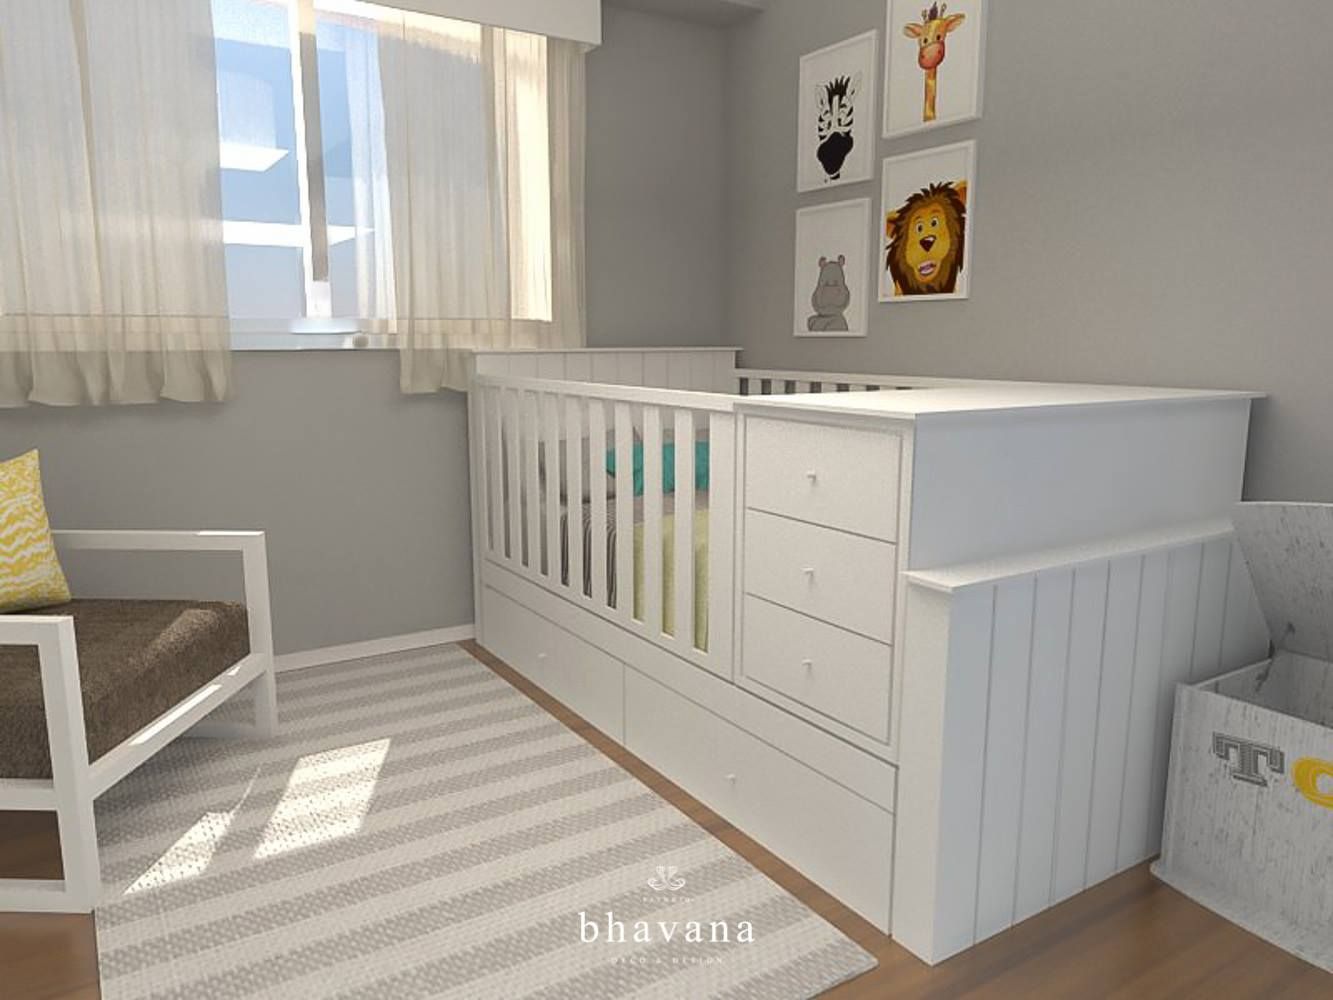 Obra Blanco Encalada - Diseño Habitación Infantil, Bhavana Bhavana Детская комната в стиле модерн